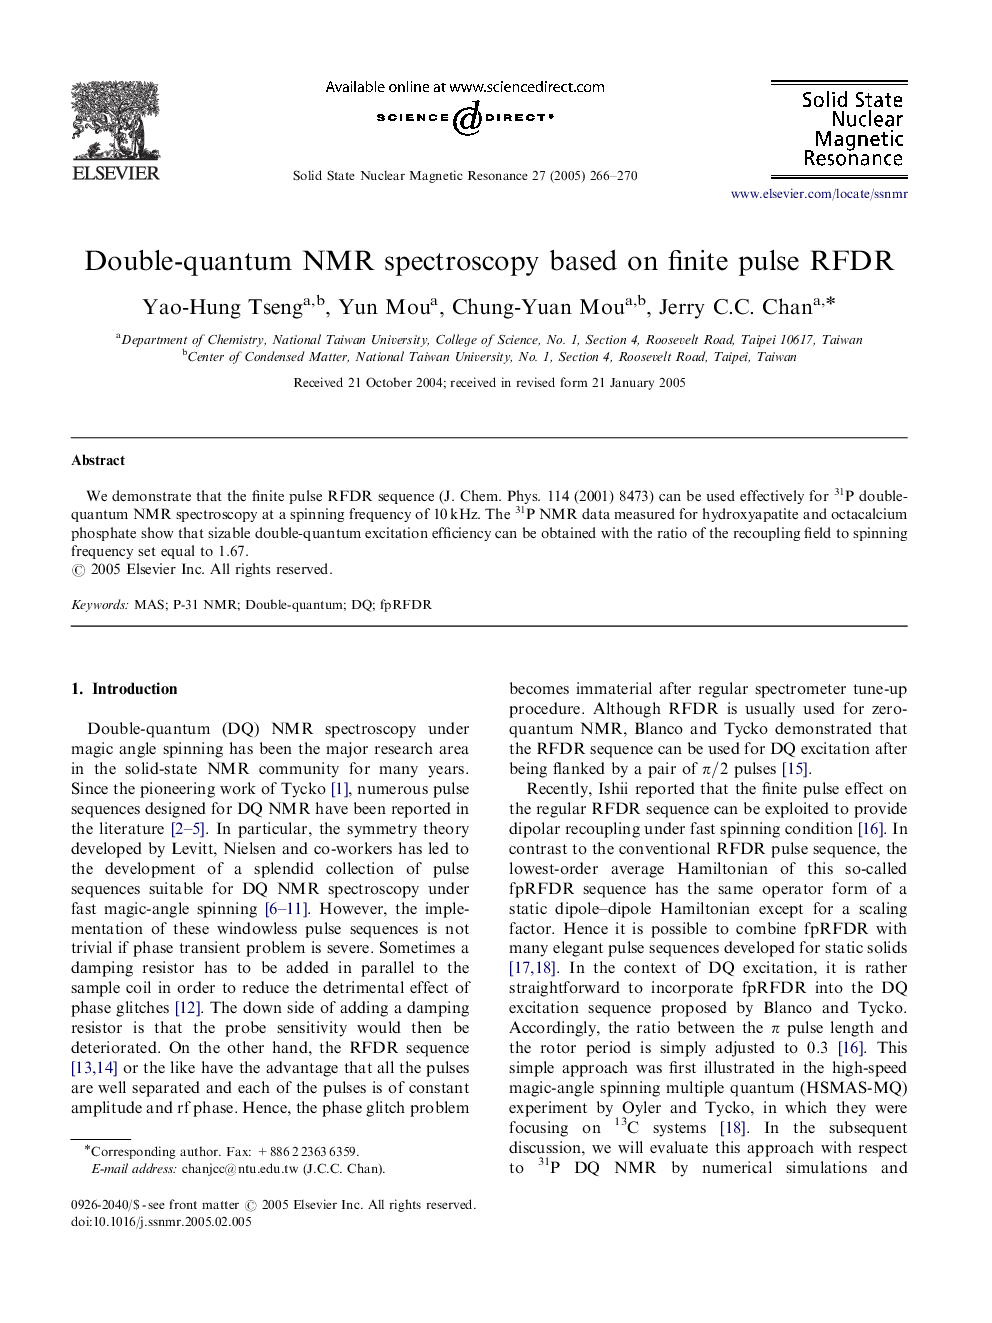 Double-quantum NMR spectroscopy based on finite pulse RFDR